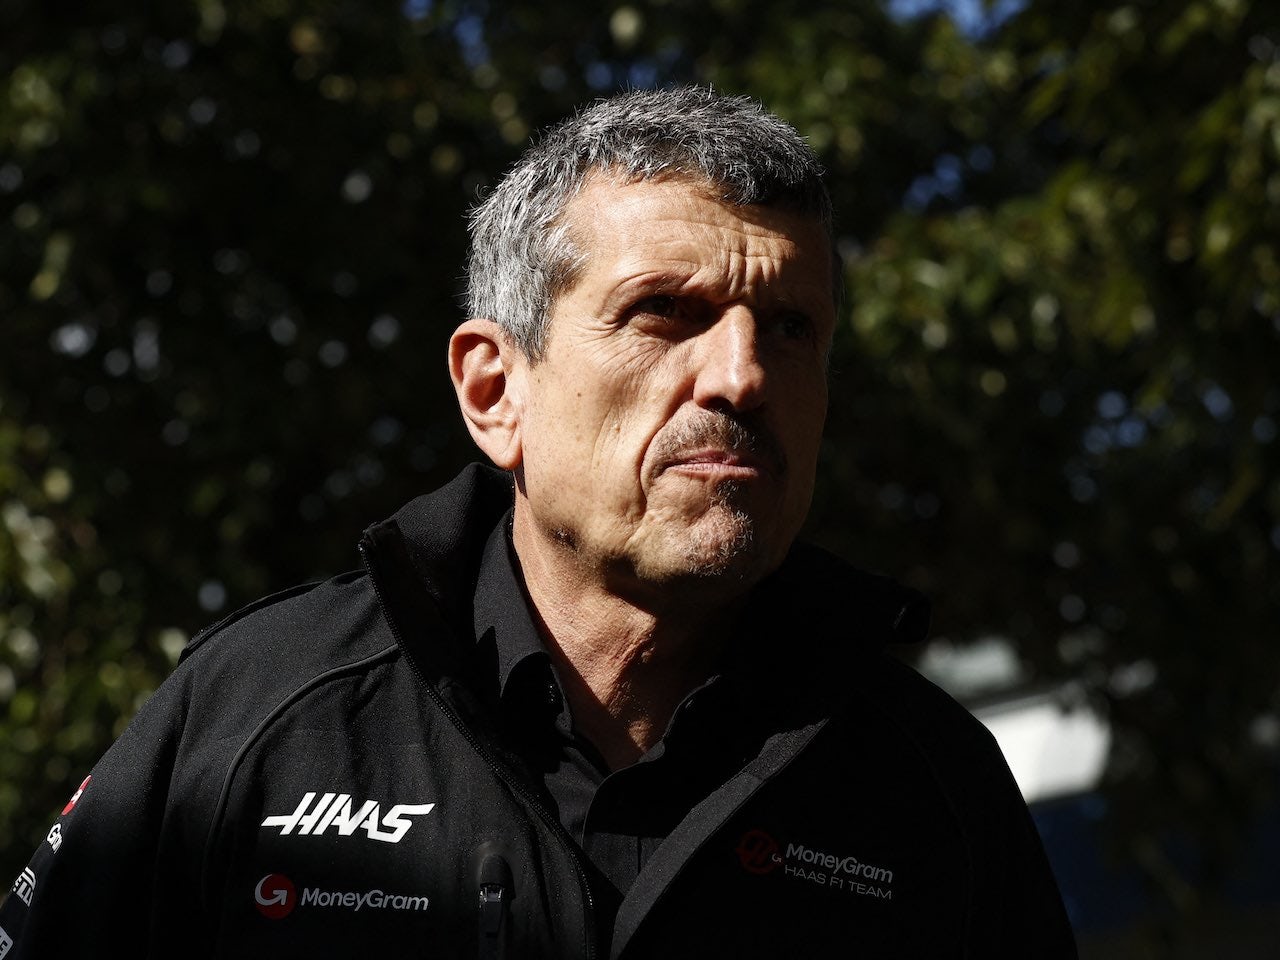 Too early for Hulkenberg, Ricciardo talks - Steiner